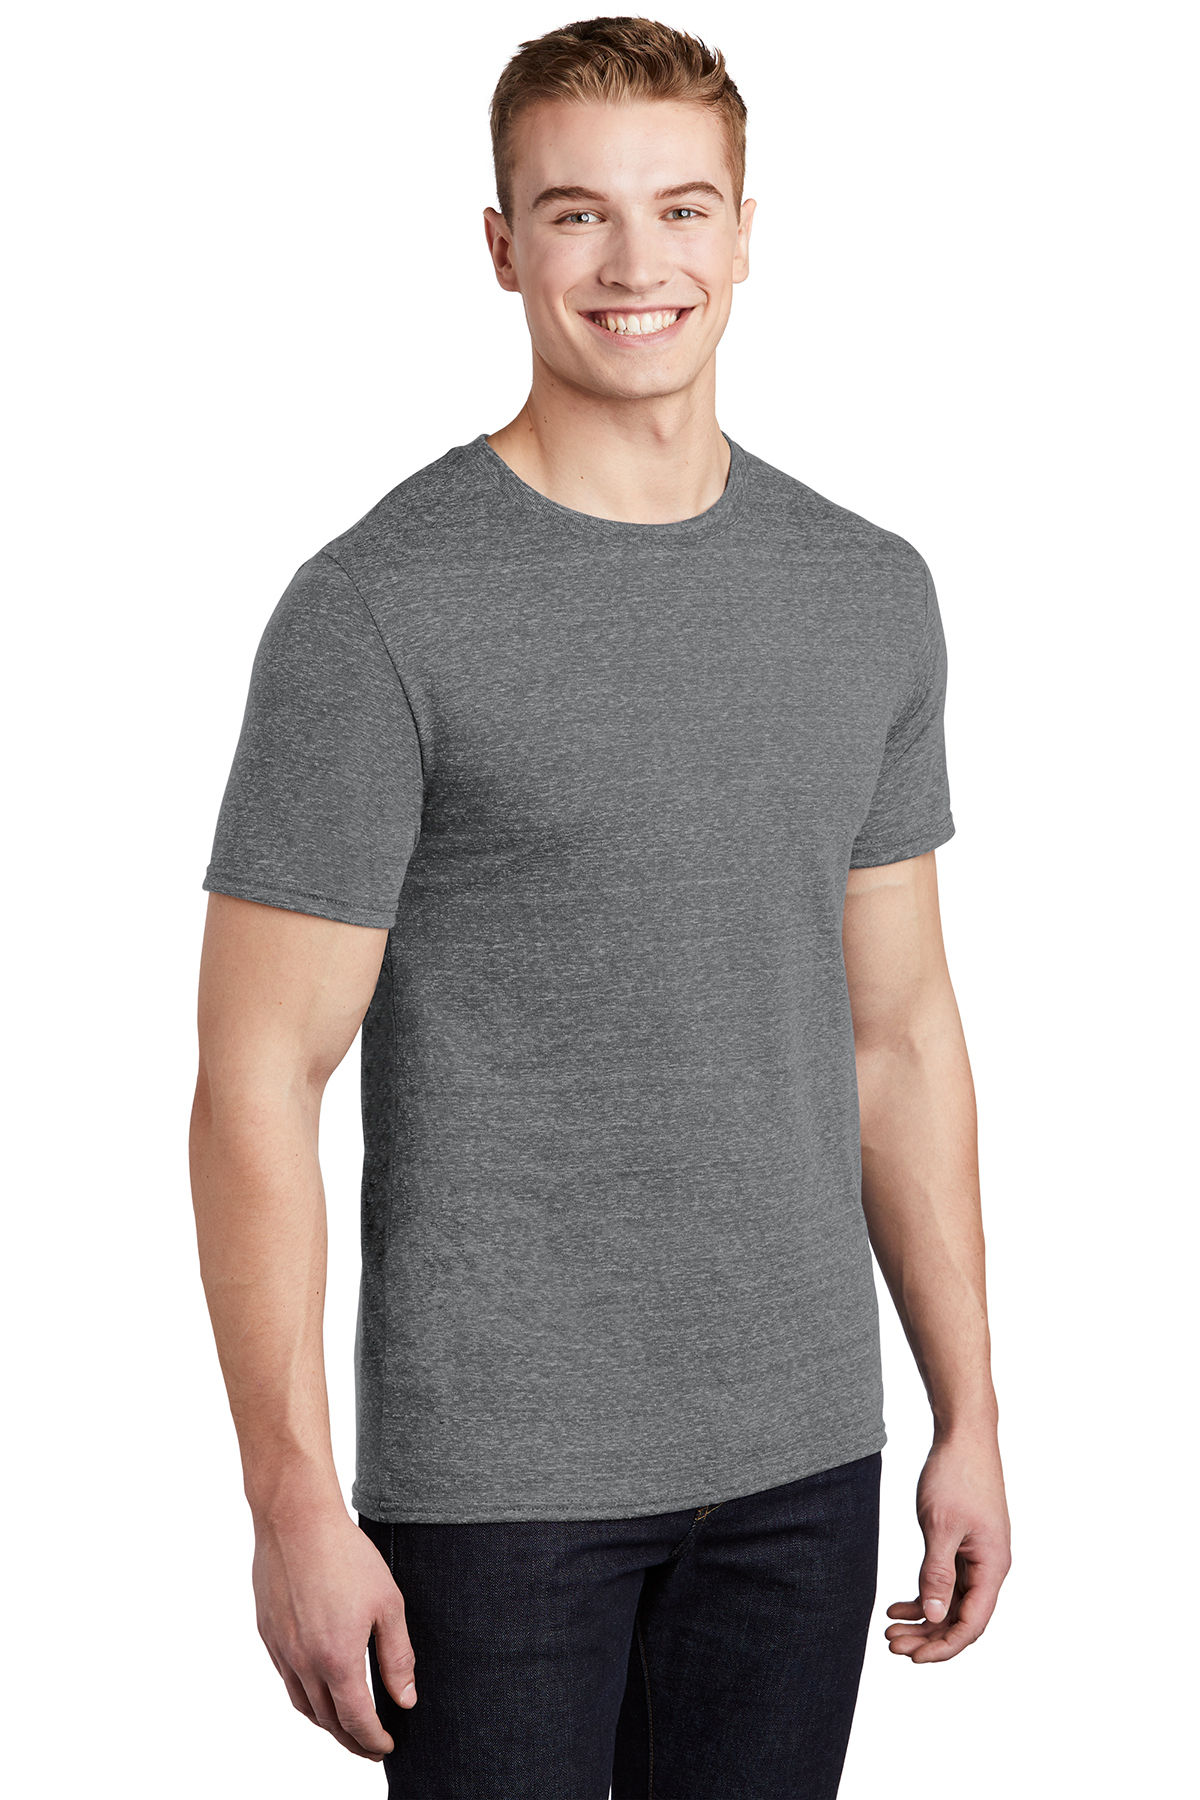 Jerzees Snow Heather Jersey T-Shirt | Product | SanMar